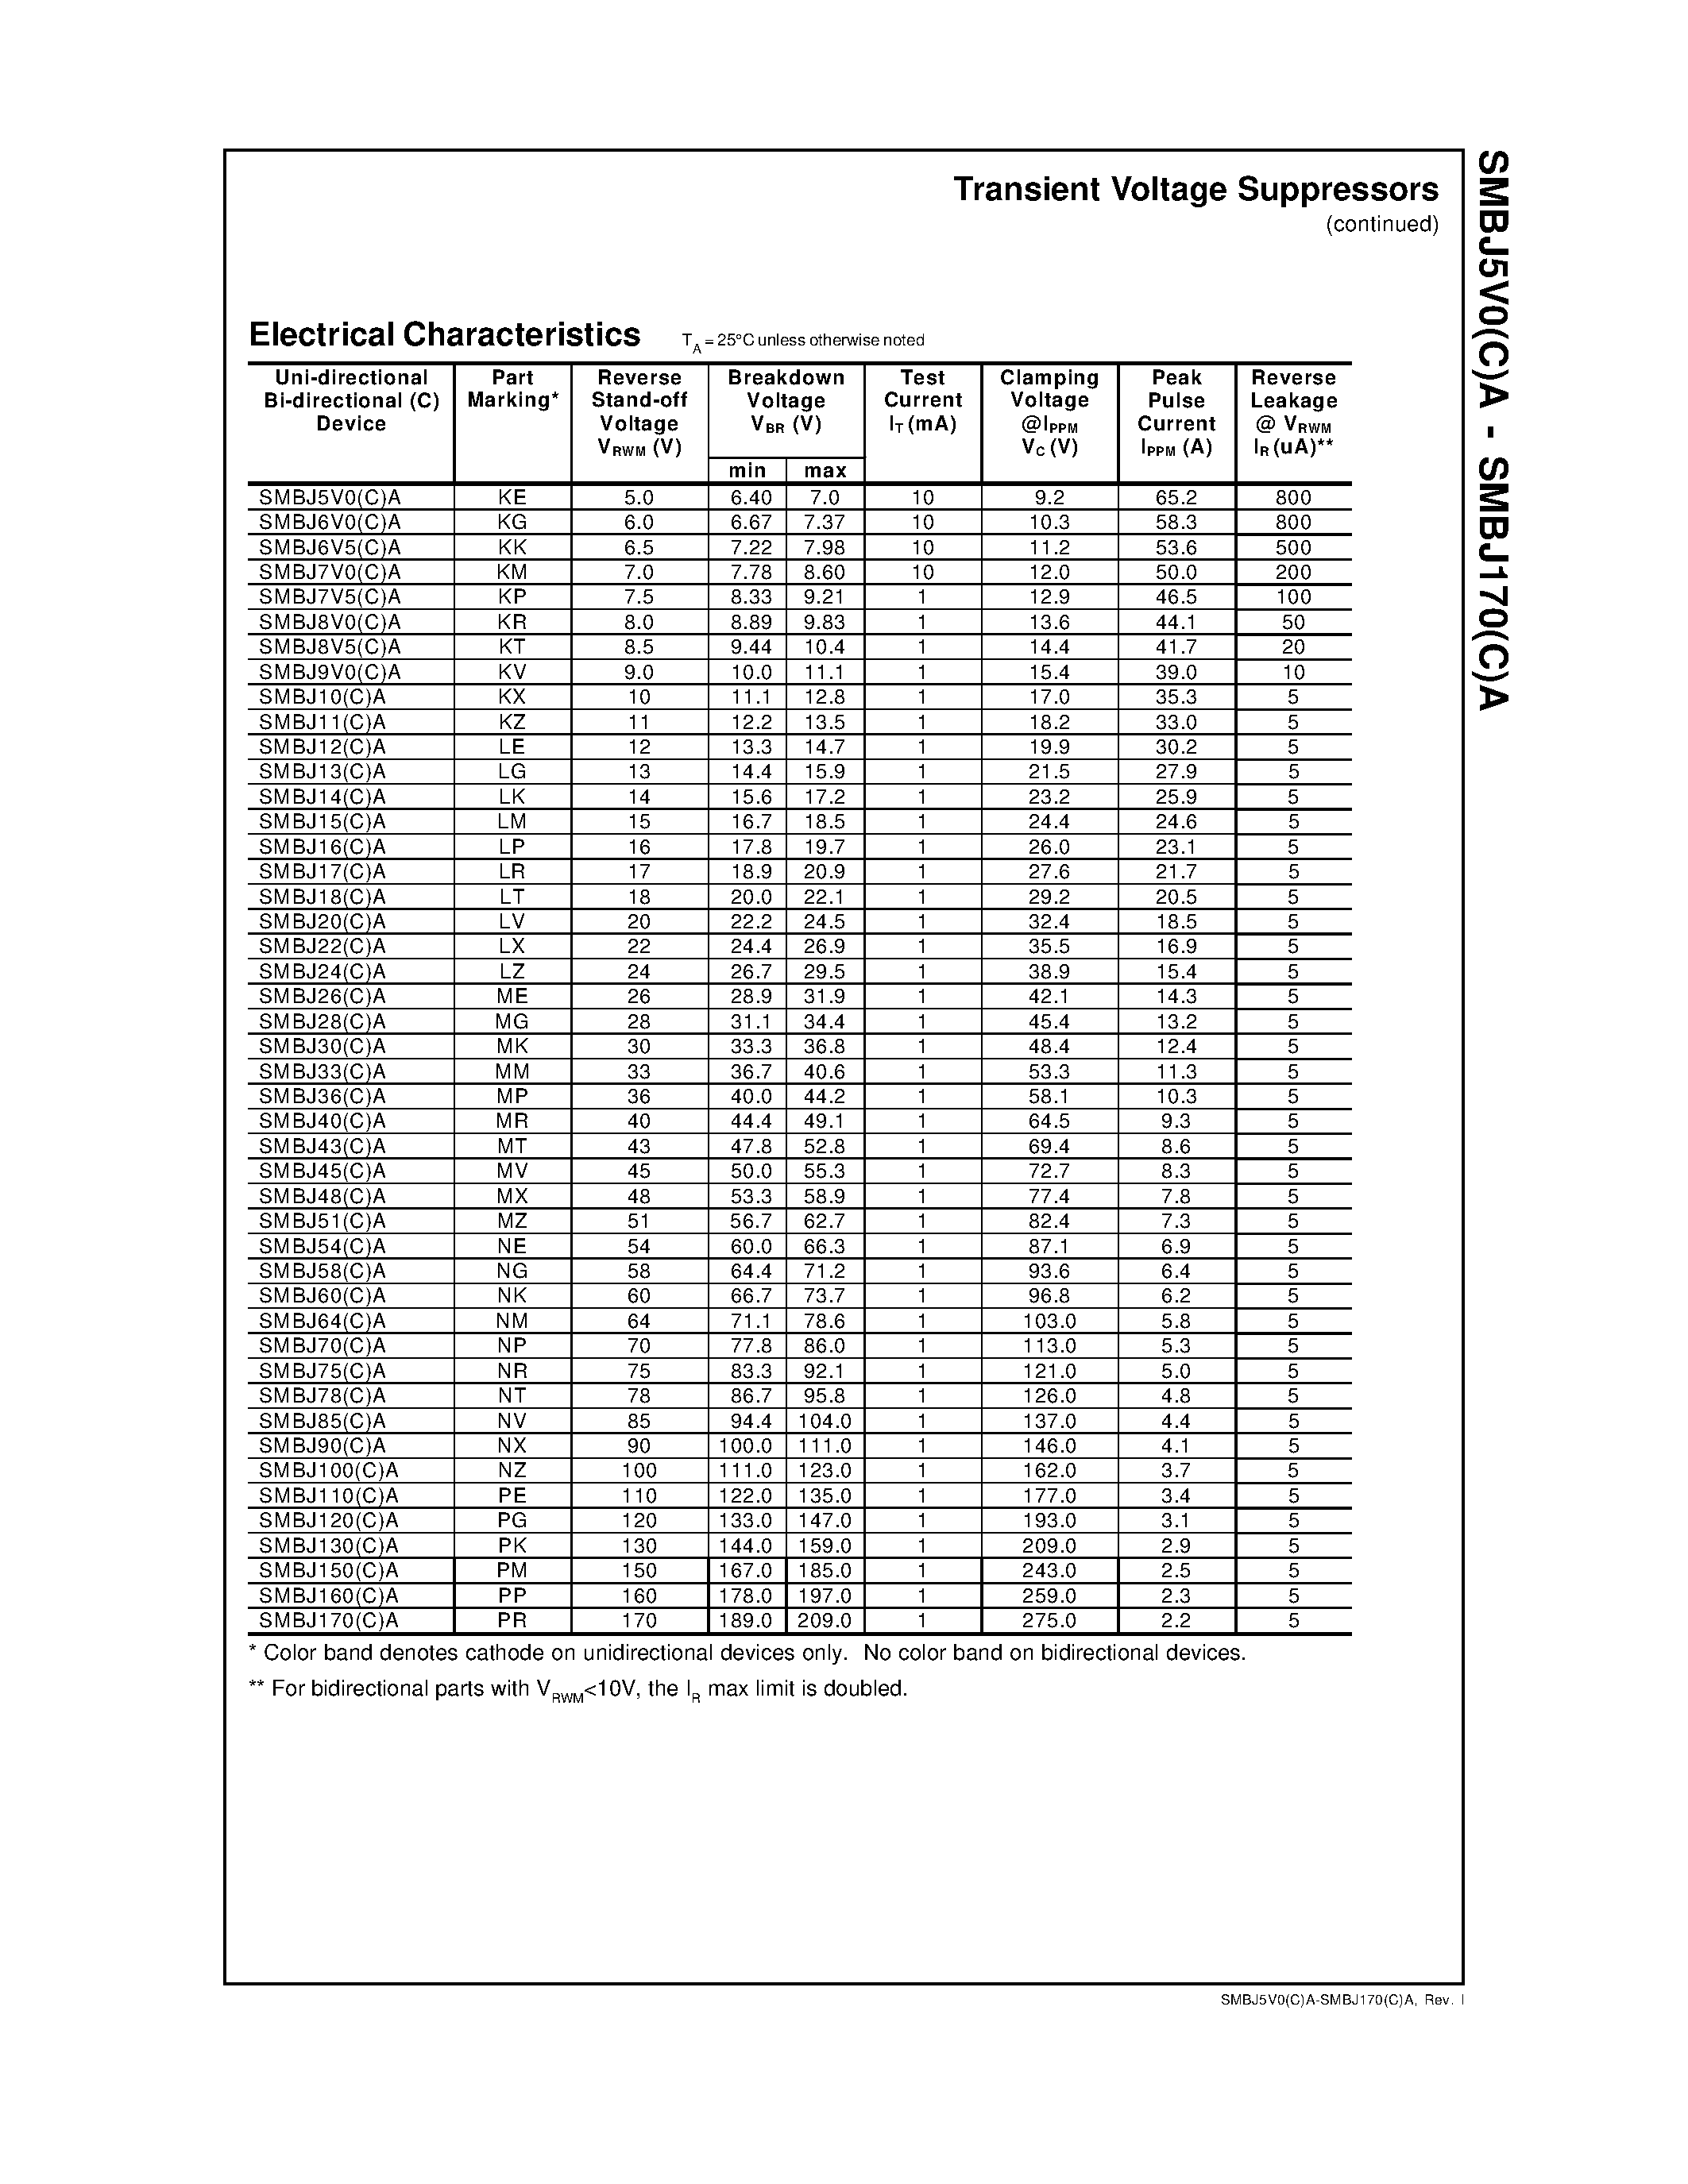 Datasheet SMBJ16A - Transient Voltage Suppressors SMBJ5V0(C)A - SMBJ170(C)A page 2